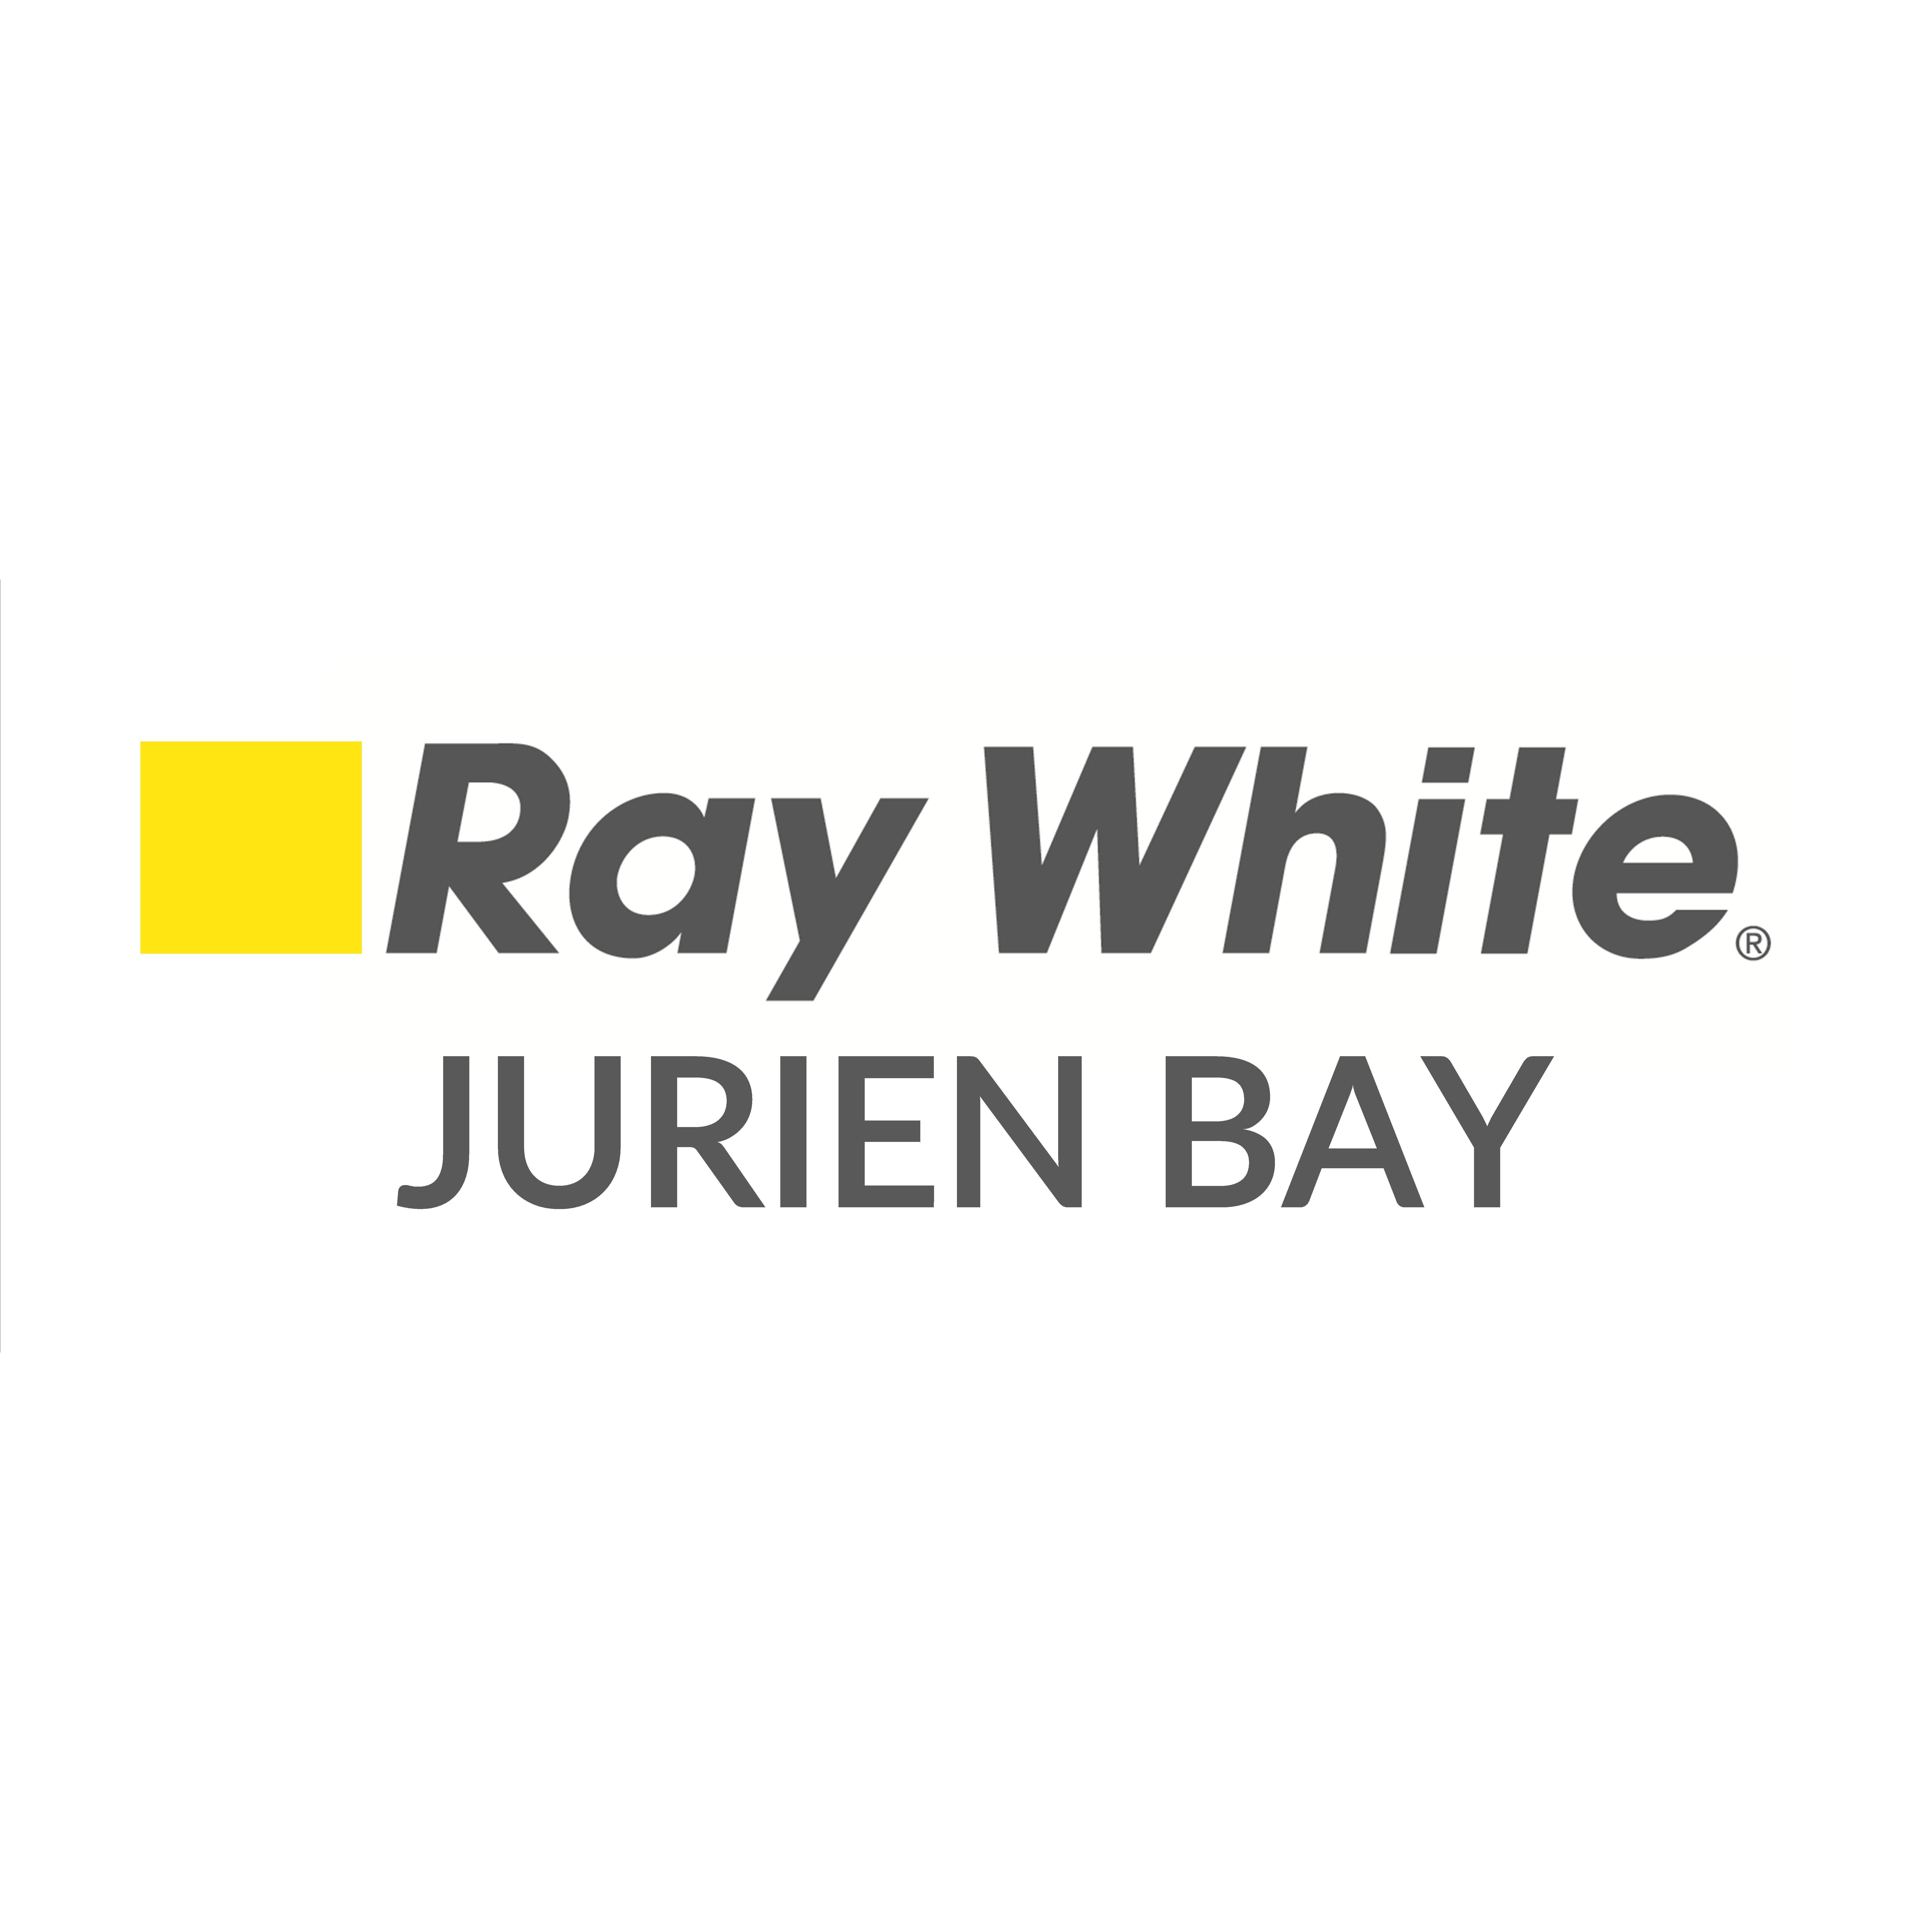 Ray White Jurien Bay Jurien Bay (08) 9652 2077